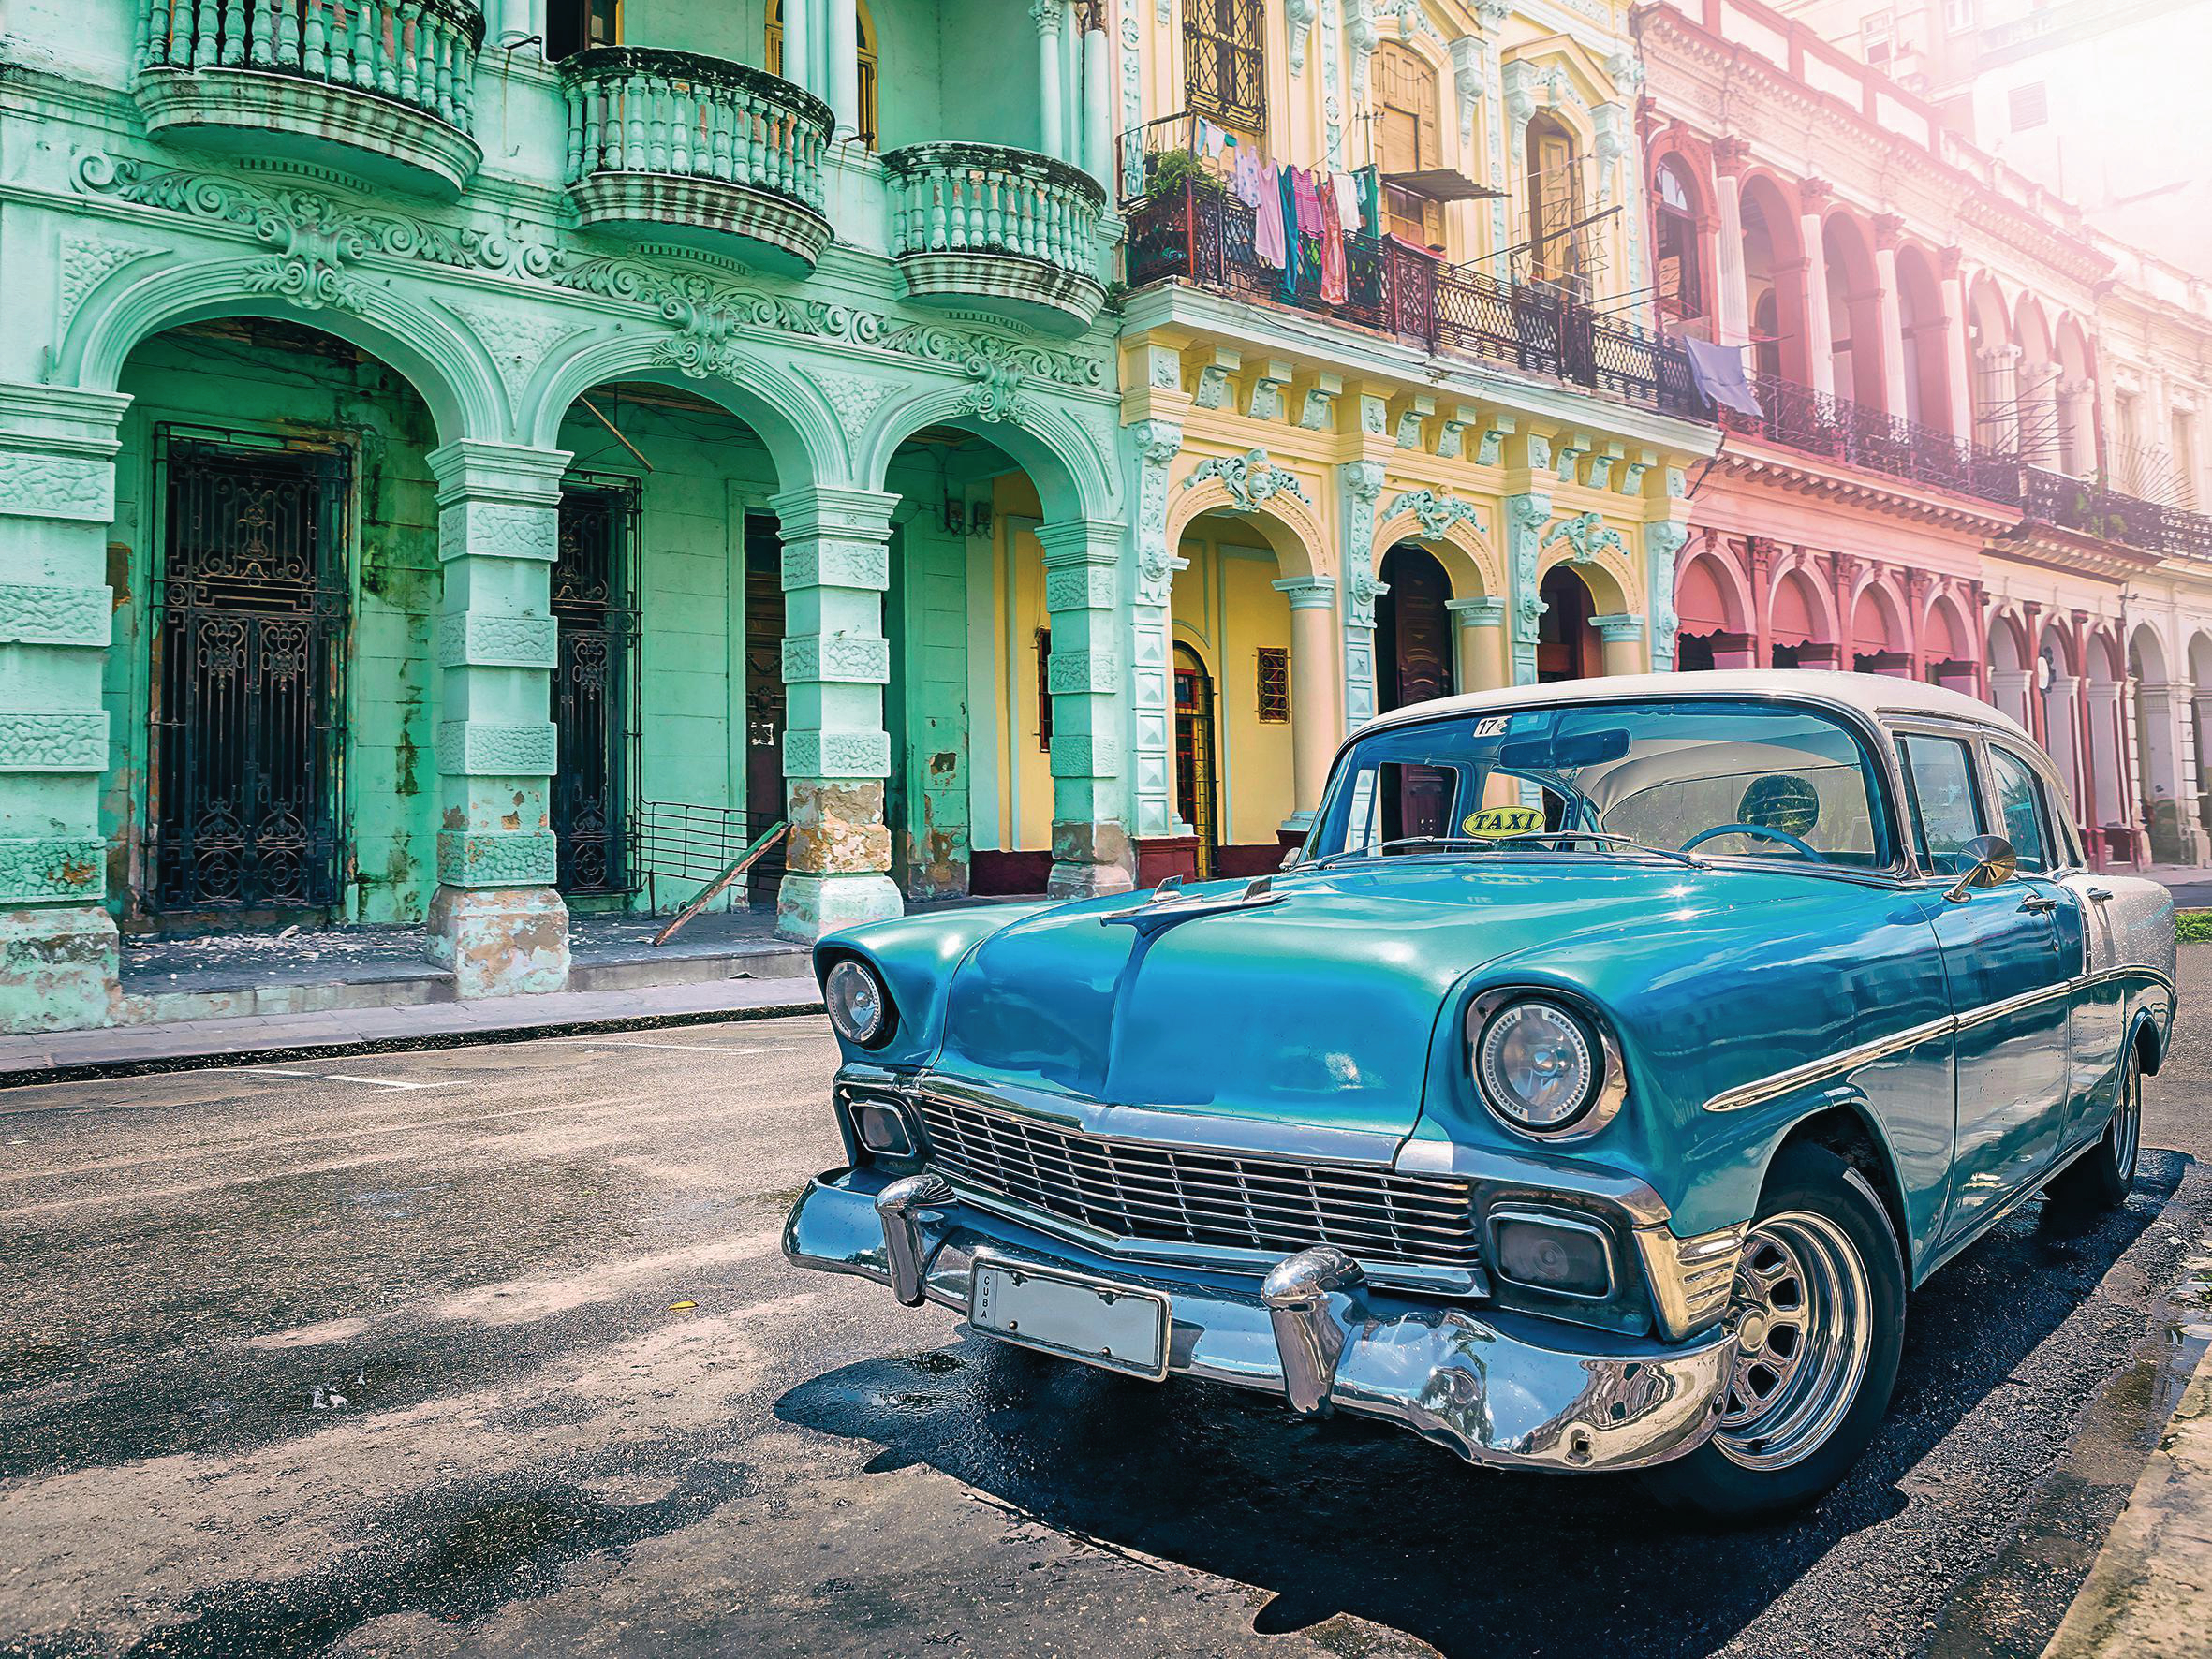 Mehrfarbig Cars RAVENSBURGER Cuba Erwachsenenpuzzle